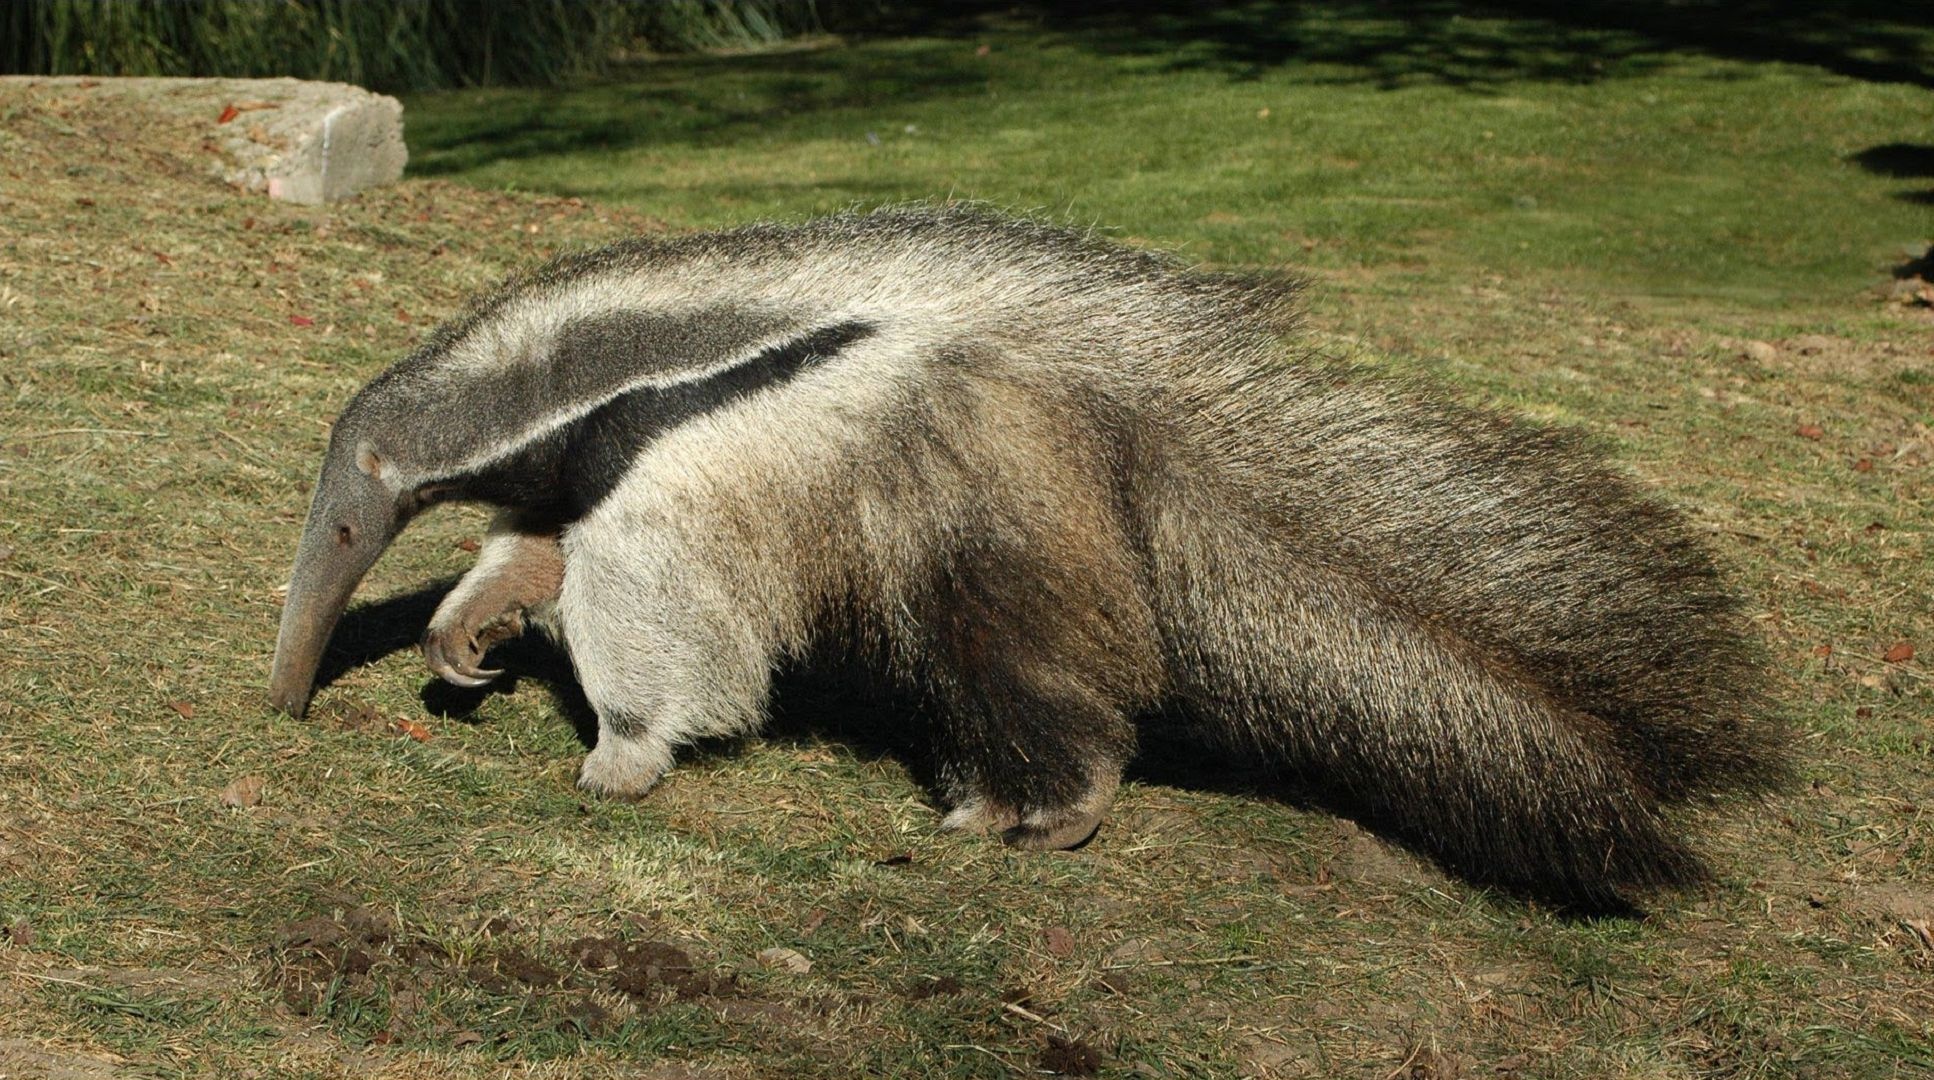 Magnificent anteater, High-definition, Furry creature, Nature's marvel, 1940x1080 HD Desktop